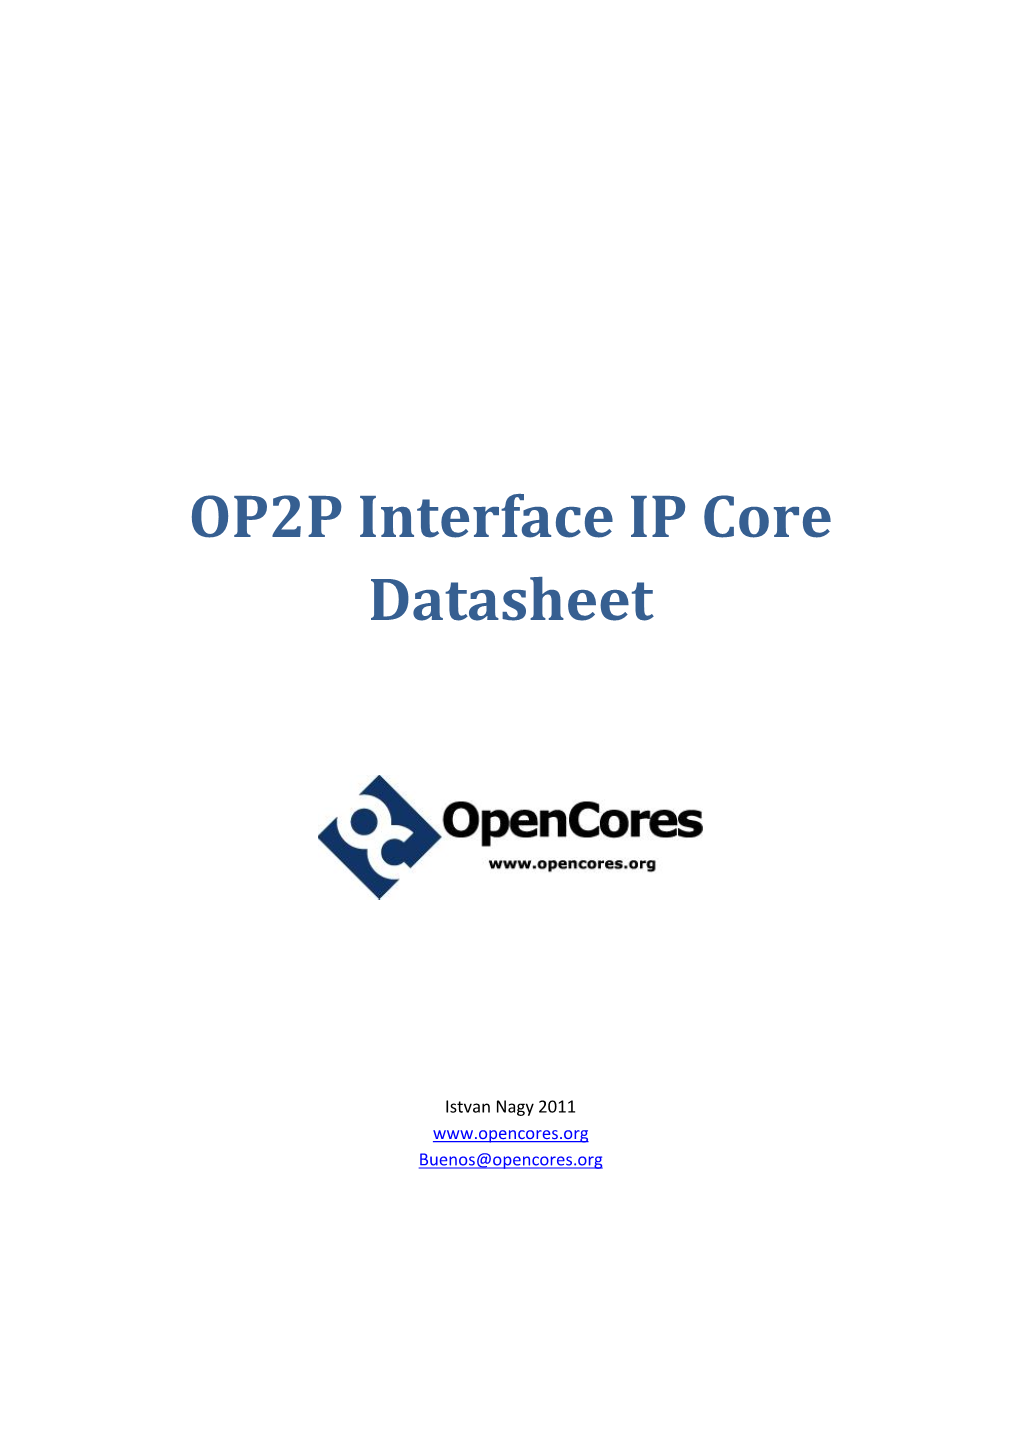 OP2P Interface IP Core Datasheet